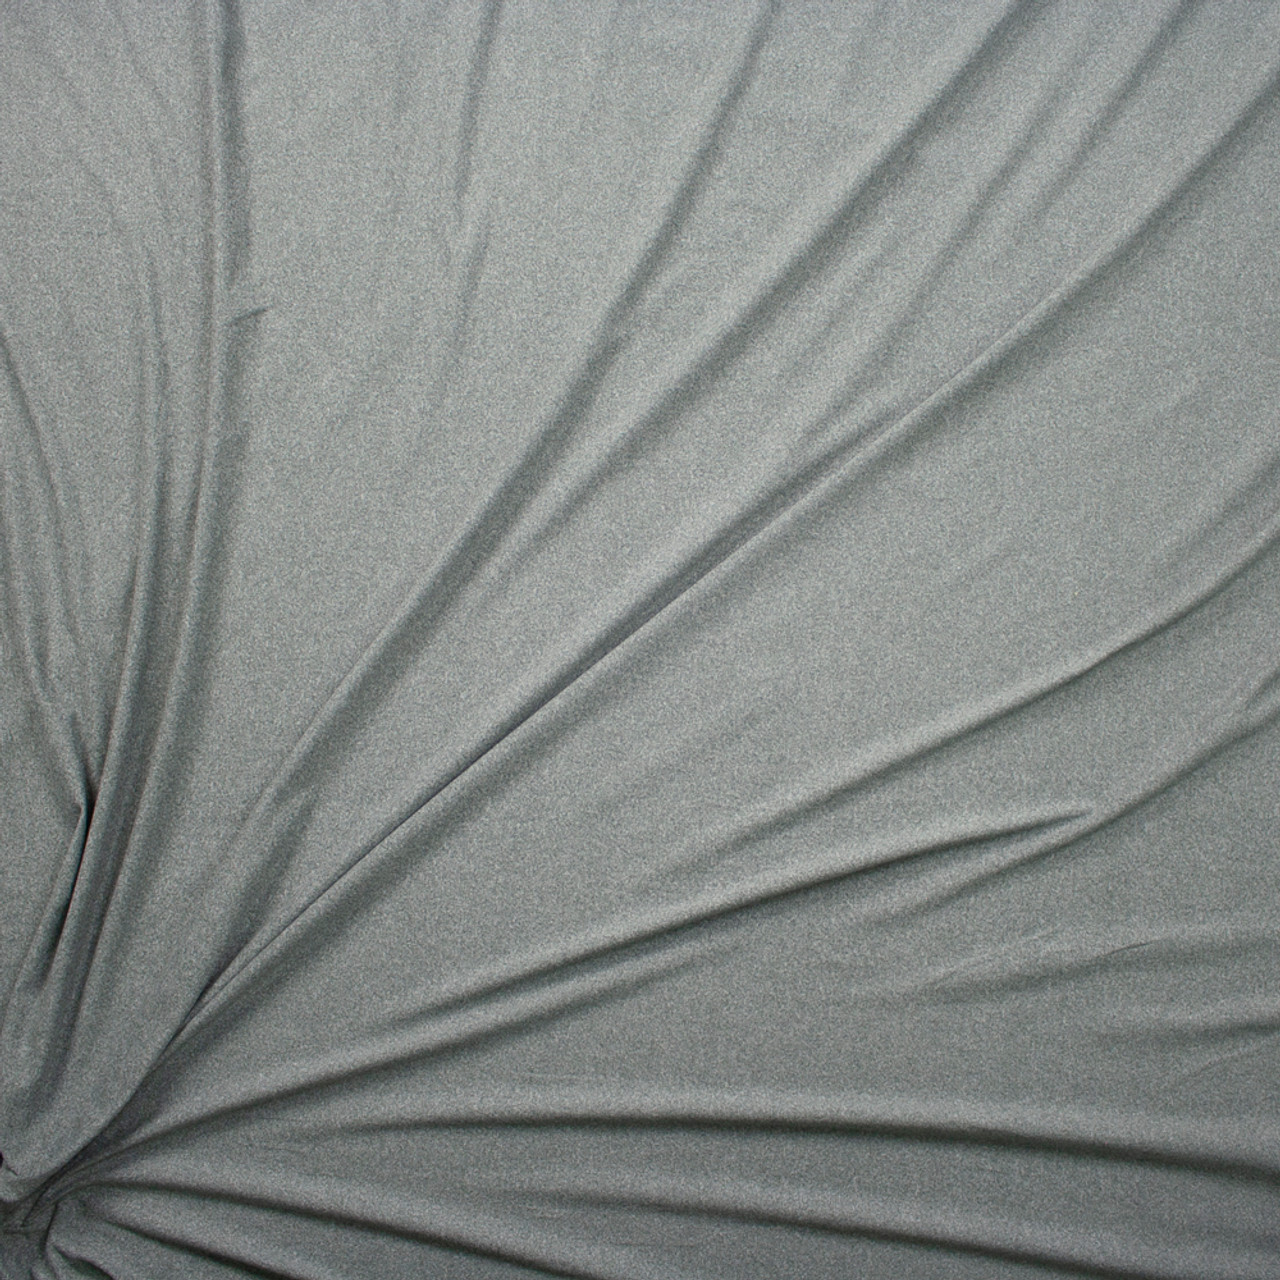 Silver Black Metallic stretch Spandex Fabric By the Yard 48 Wide